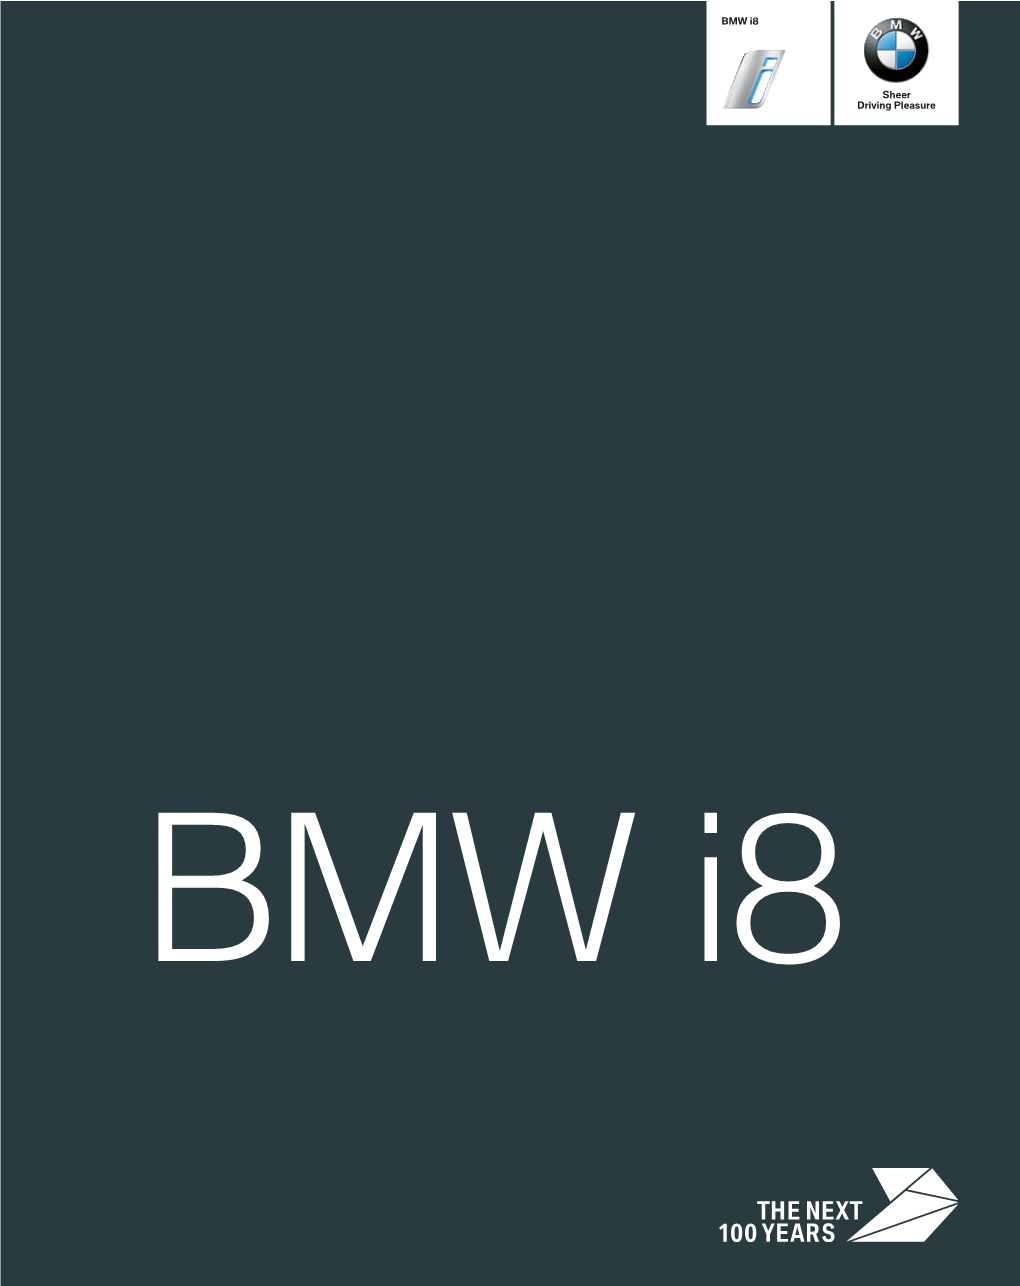 BMW I8 Sheer Driving Pleasure